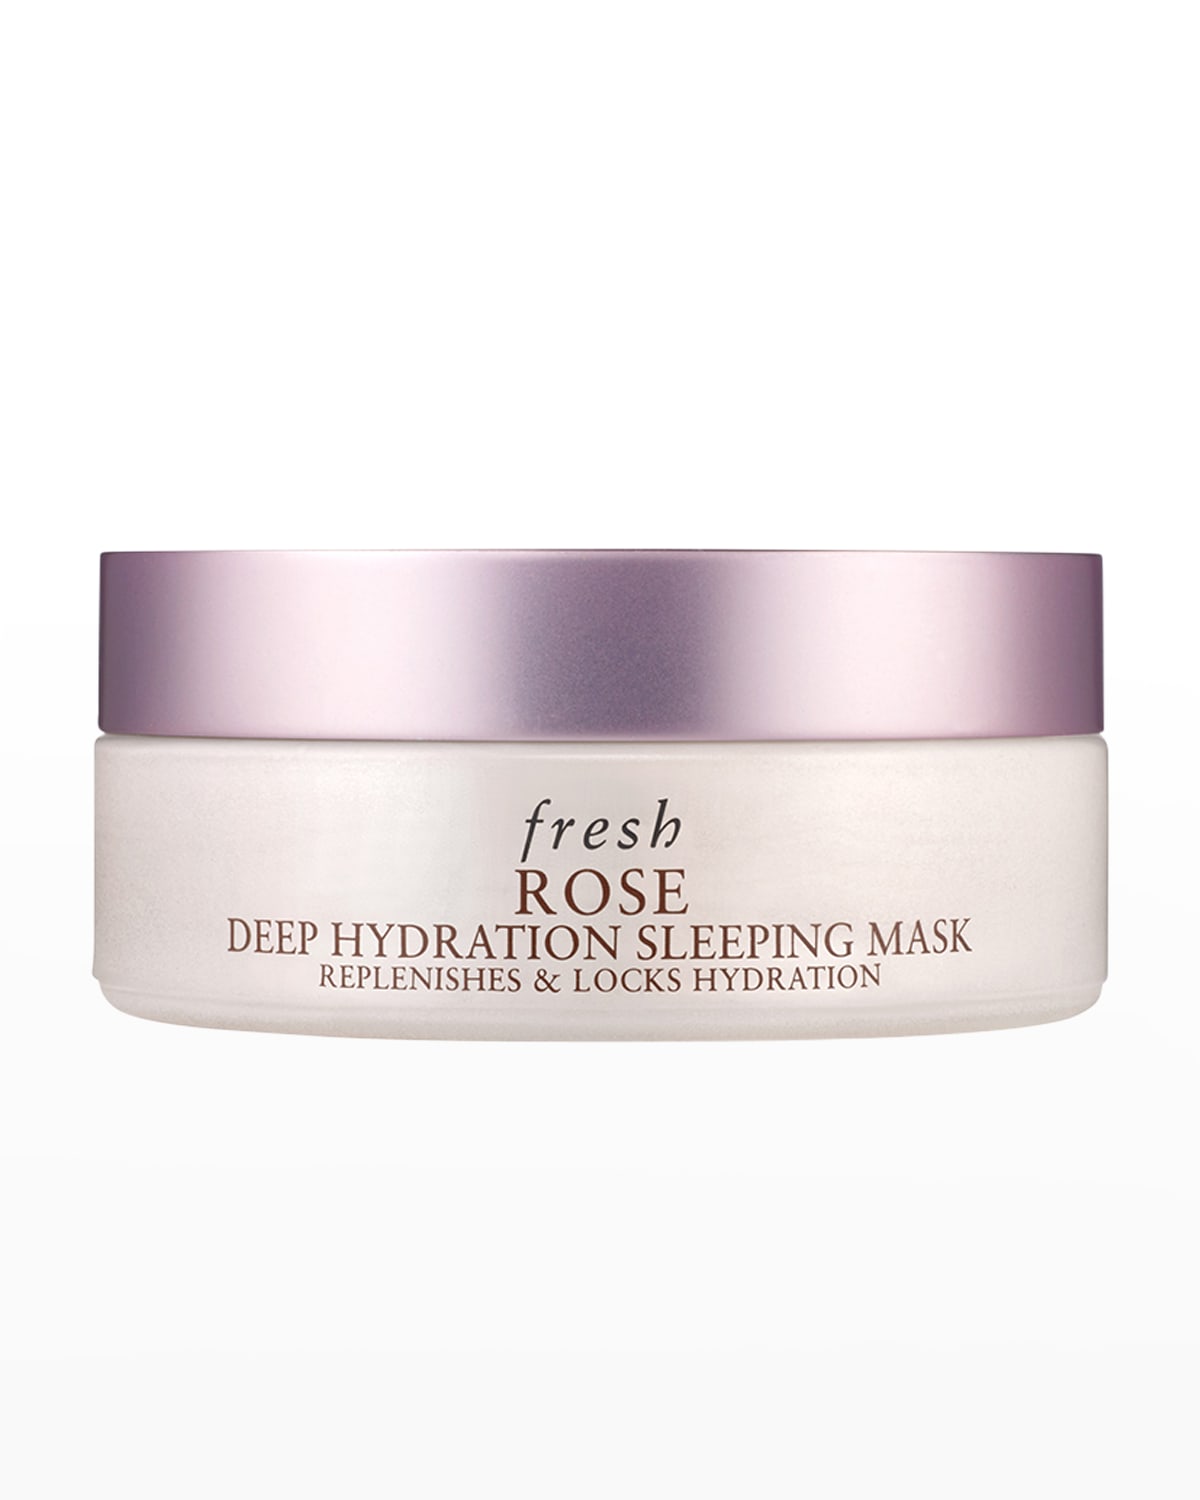 Rose Deep Hydration Sleeping Mask, 2.4 oz.